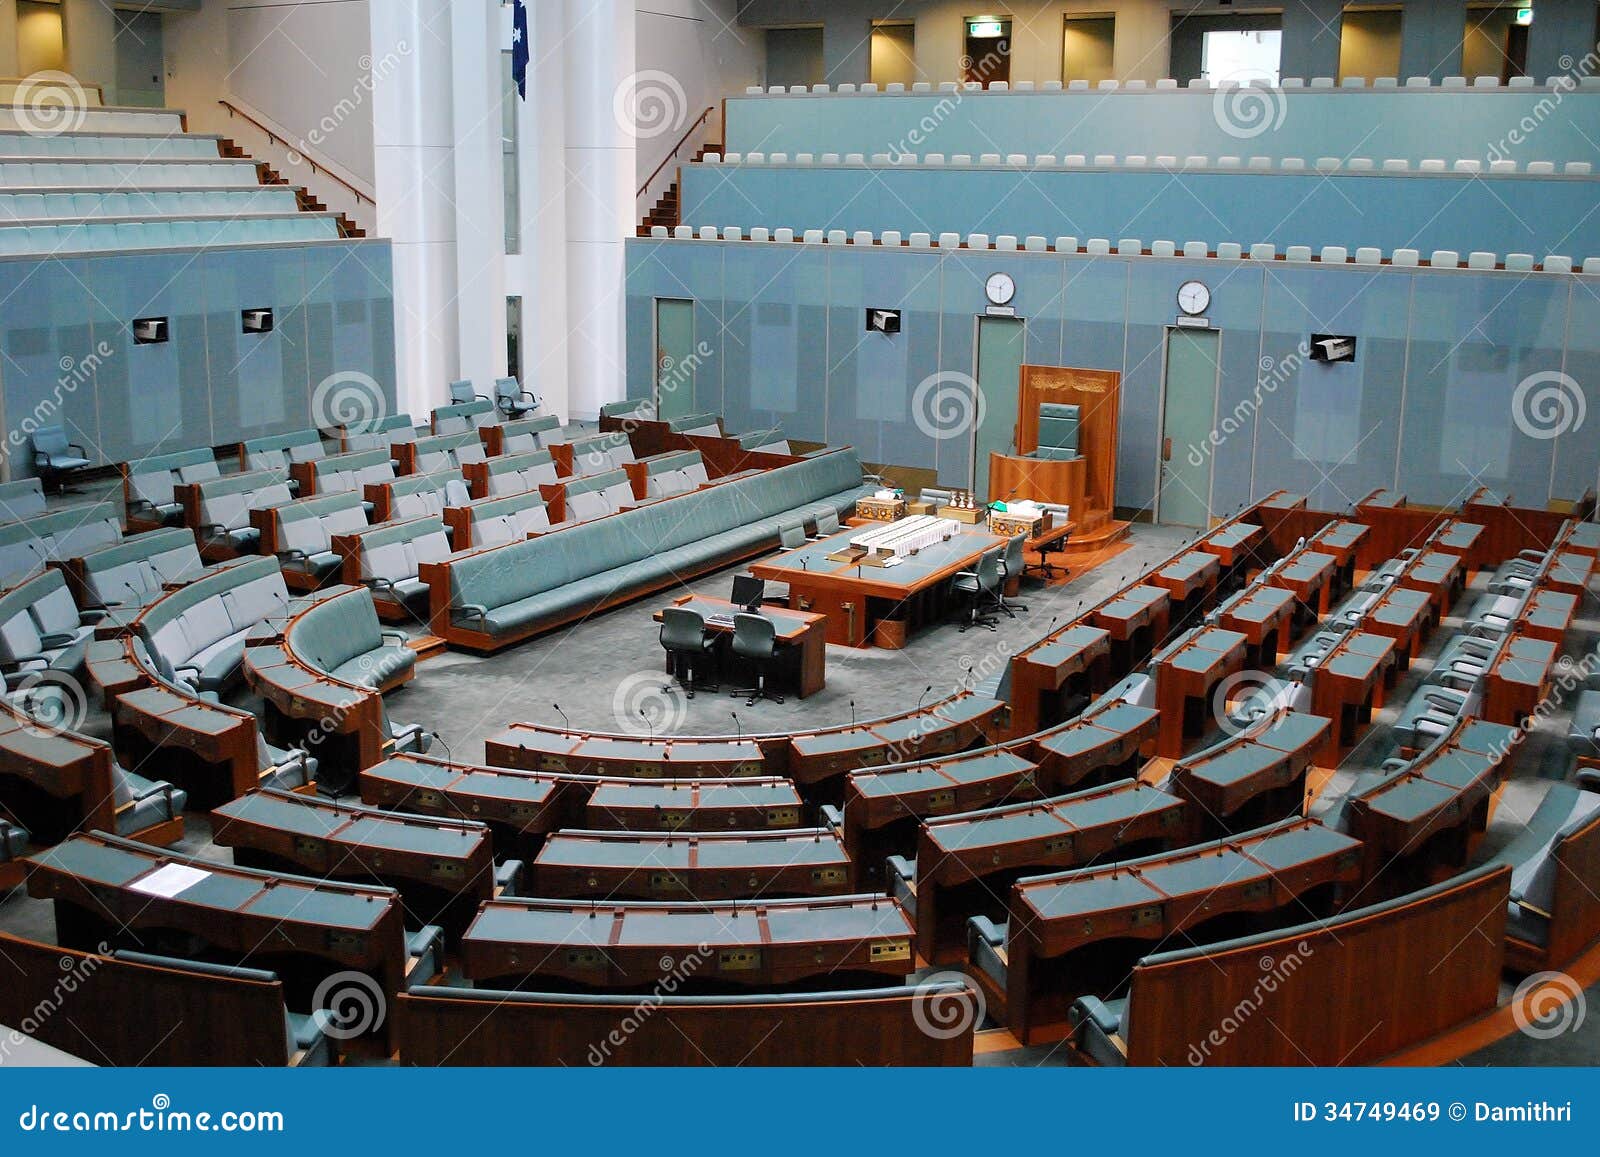 house of representatives clipart - photo #36